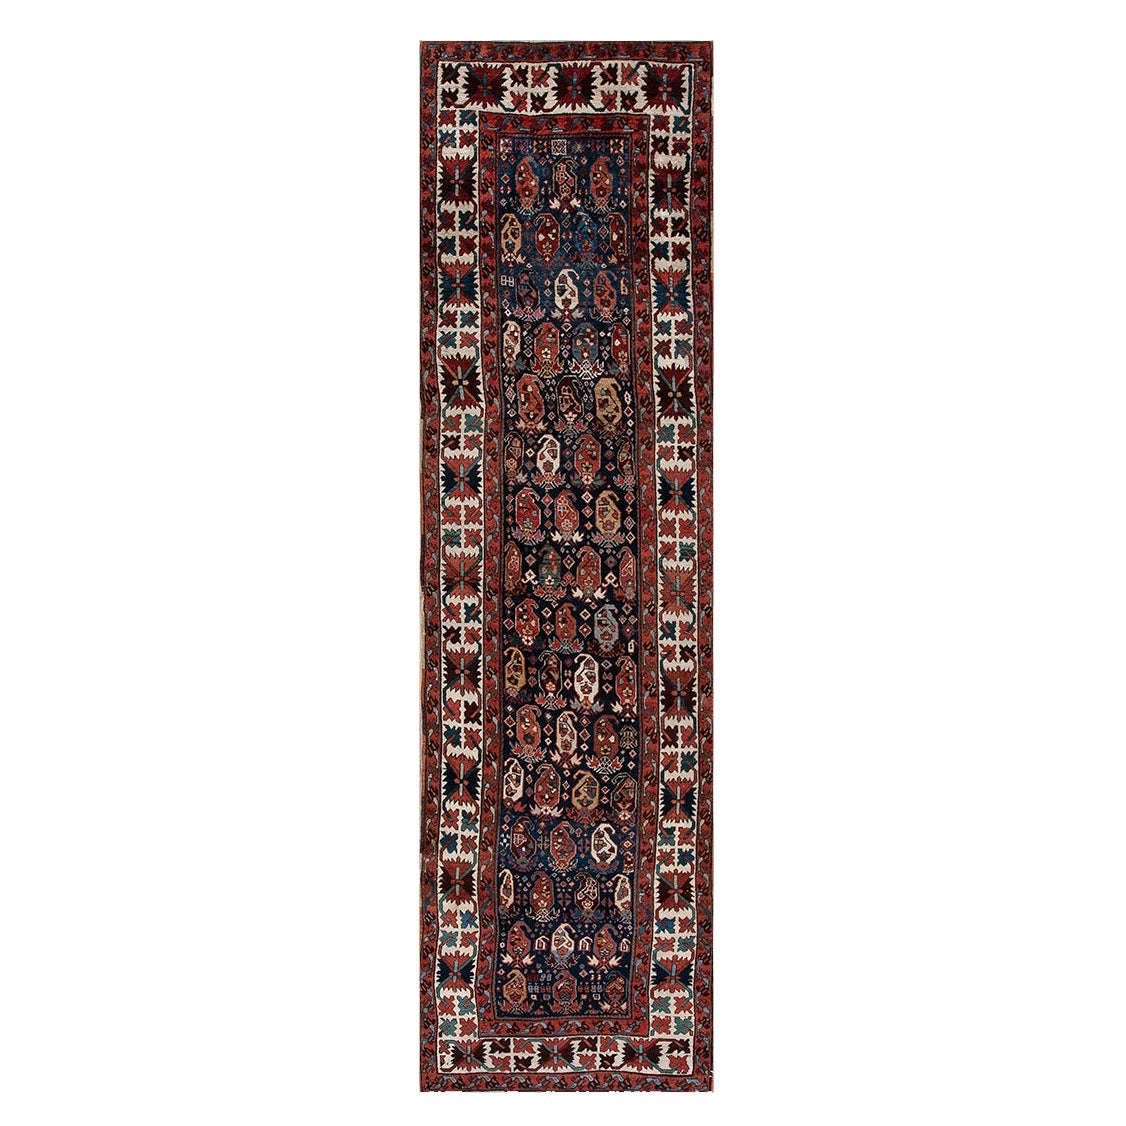 19th Century Caucasian Kazak Carpet ( 3'2" x 10'10" - 97 x 330 ) For Sale